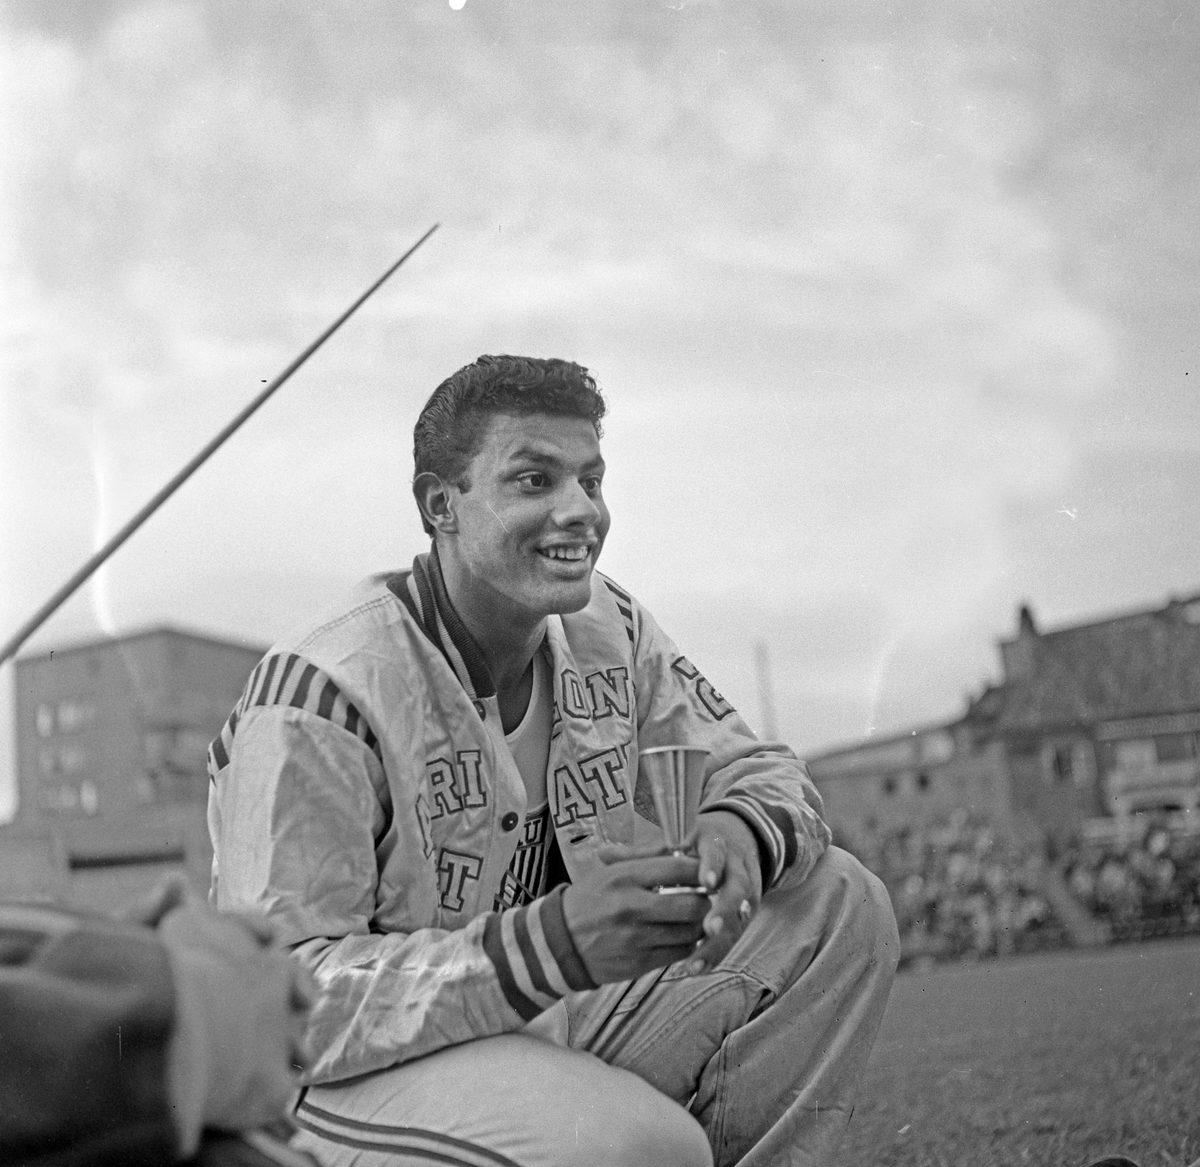 Serie. Sport. Friidrett. Norge-USA.
Fotografert 1947. 
